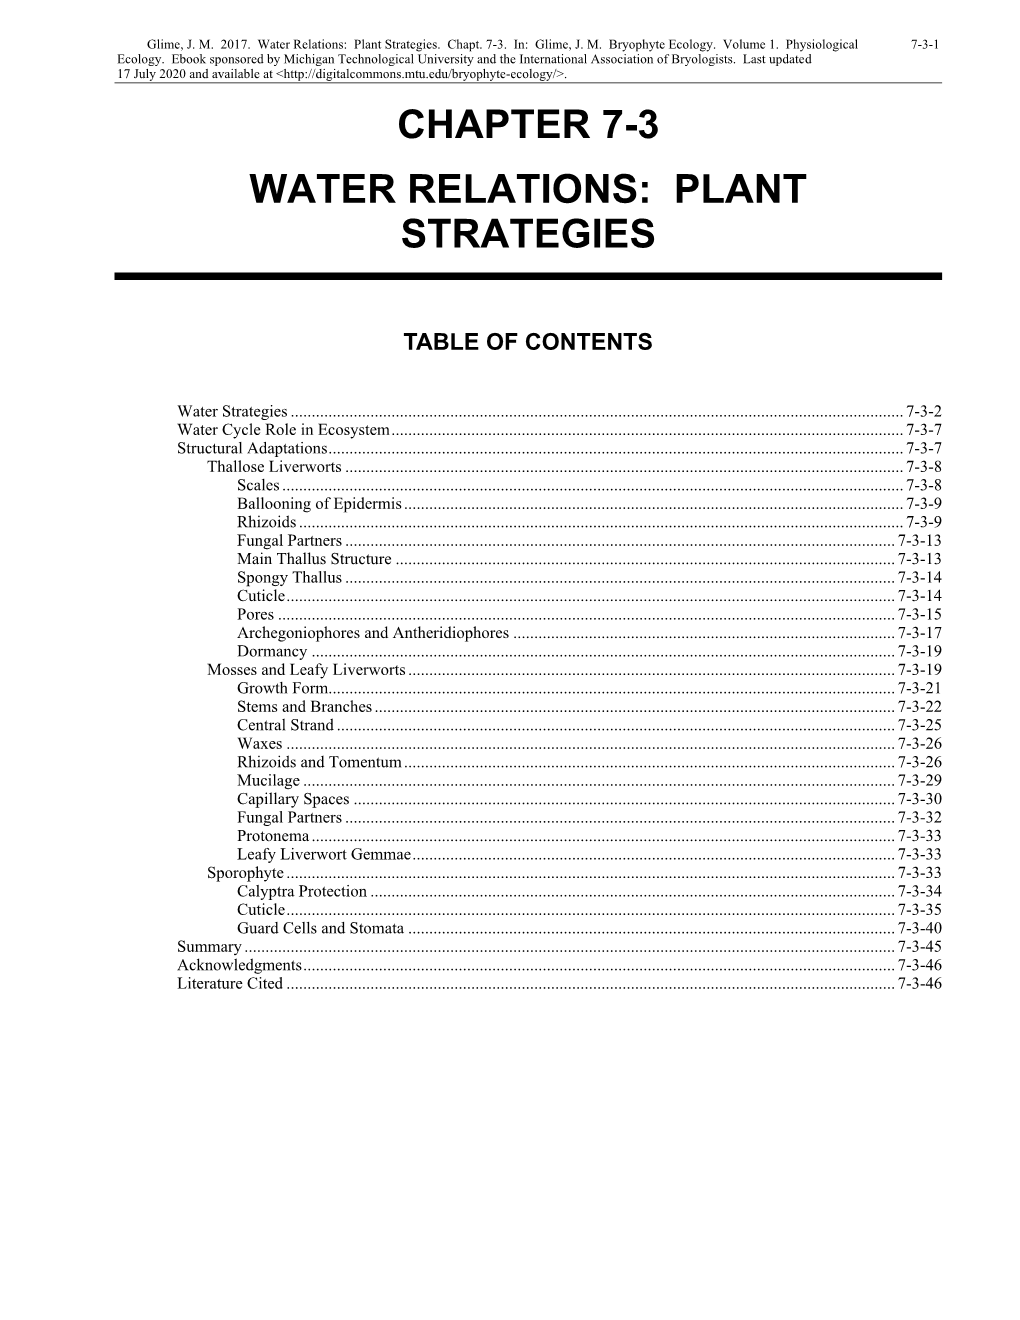 Water Relations: Plant Strategies